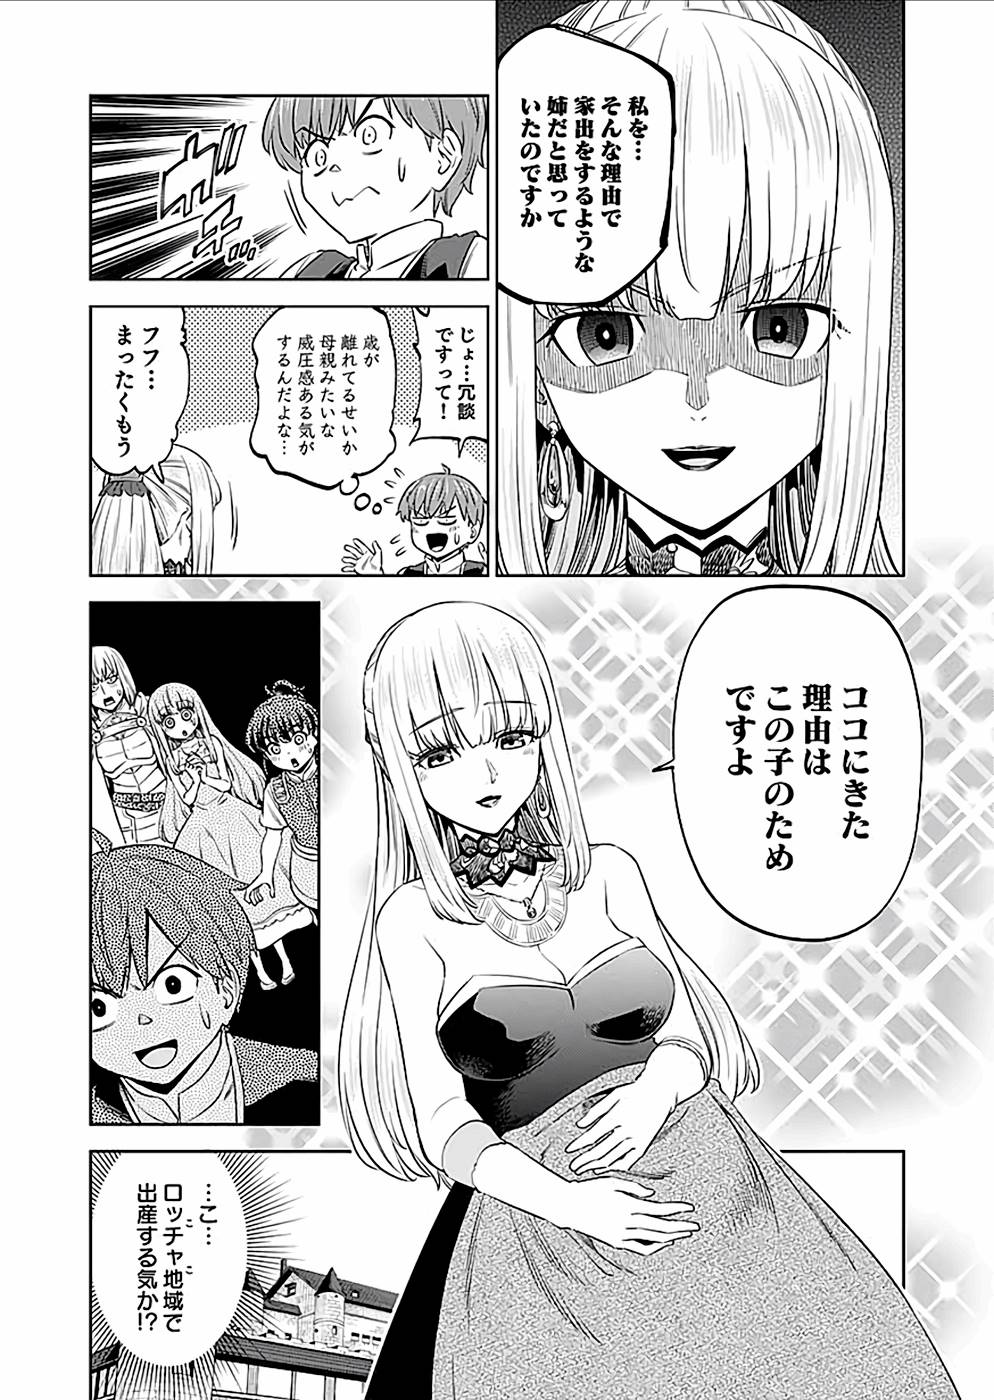 Millimos Saga: Battei Ouji no Tensei Senki - Chapter 21 - Page 40